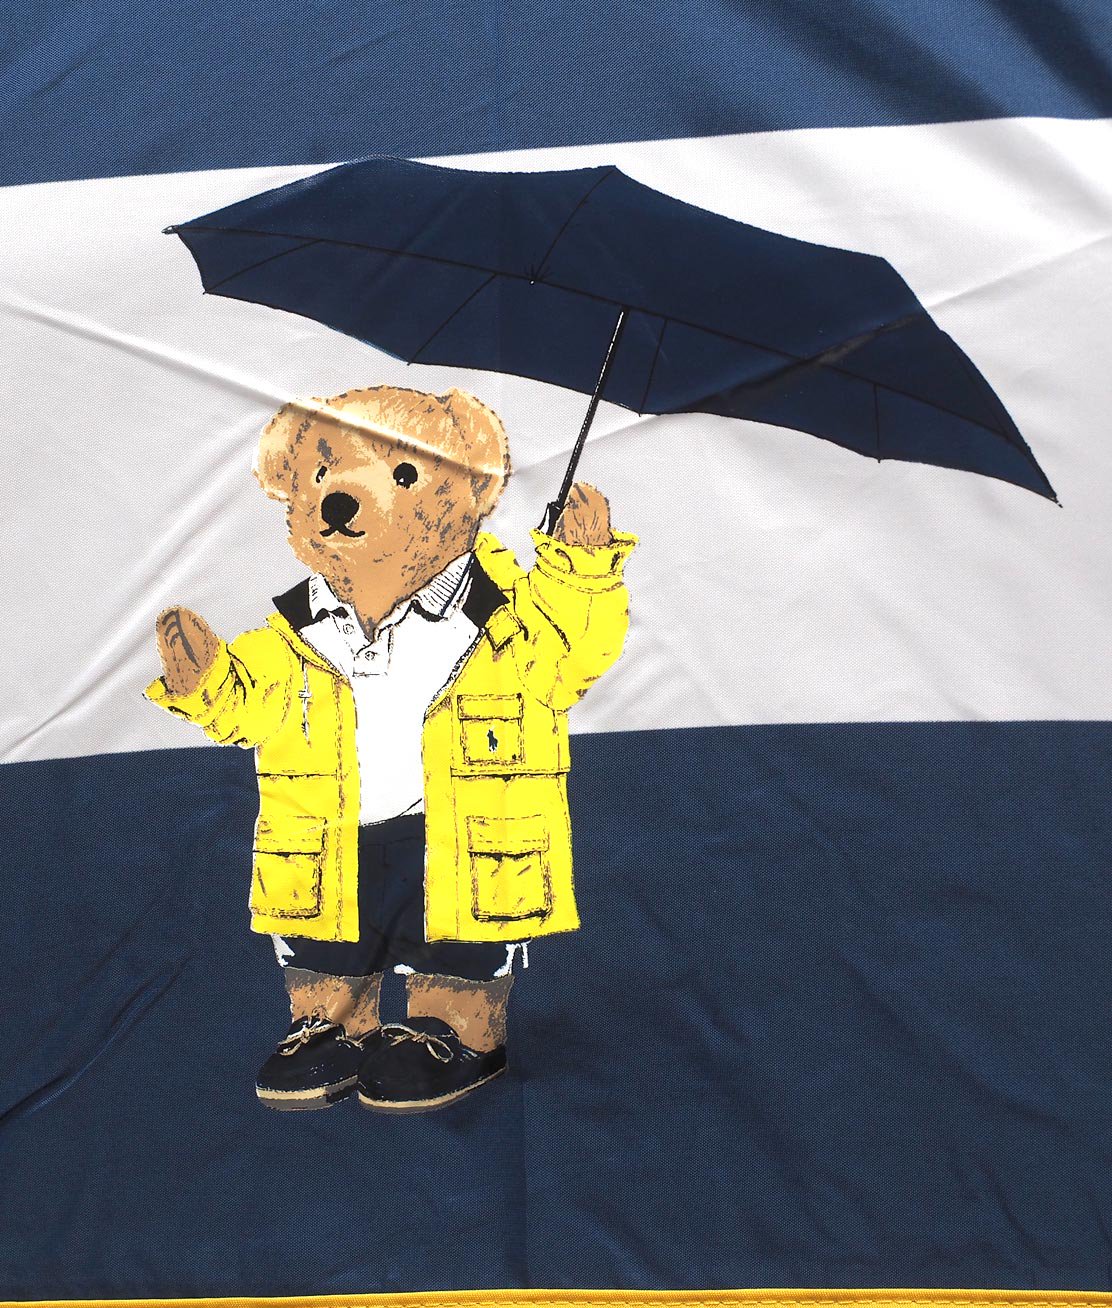 【Ralph Lauren】POLO BEAR COLLAPSIBLE UMBRELLA - WHT/NVY 自動開閉 折りたたみ傘